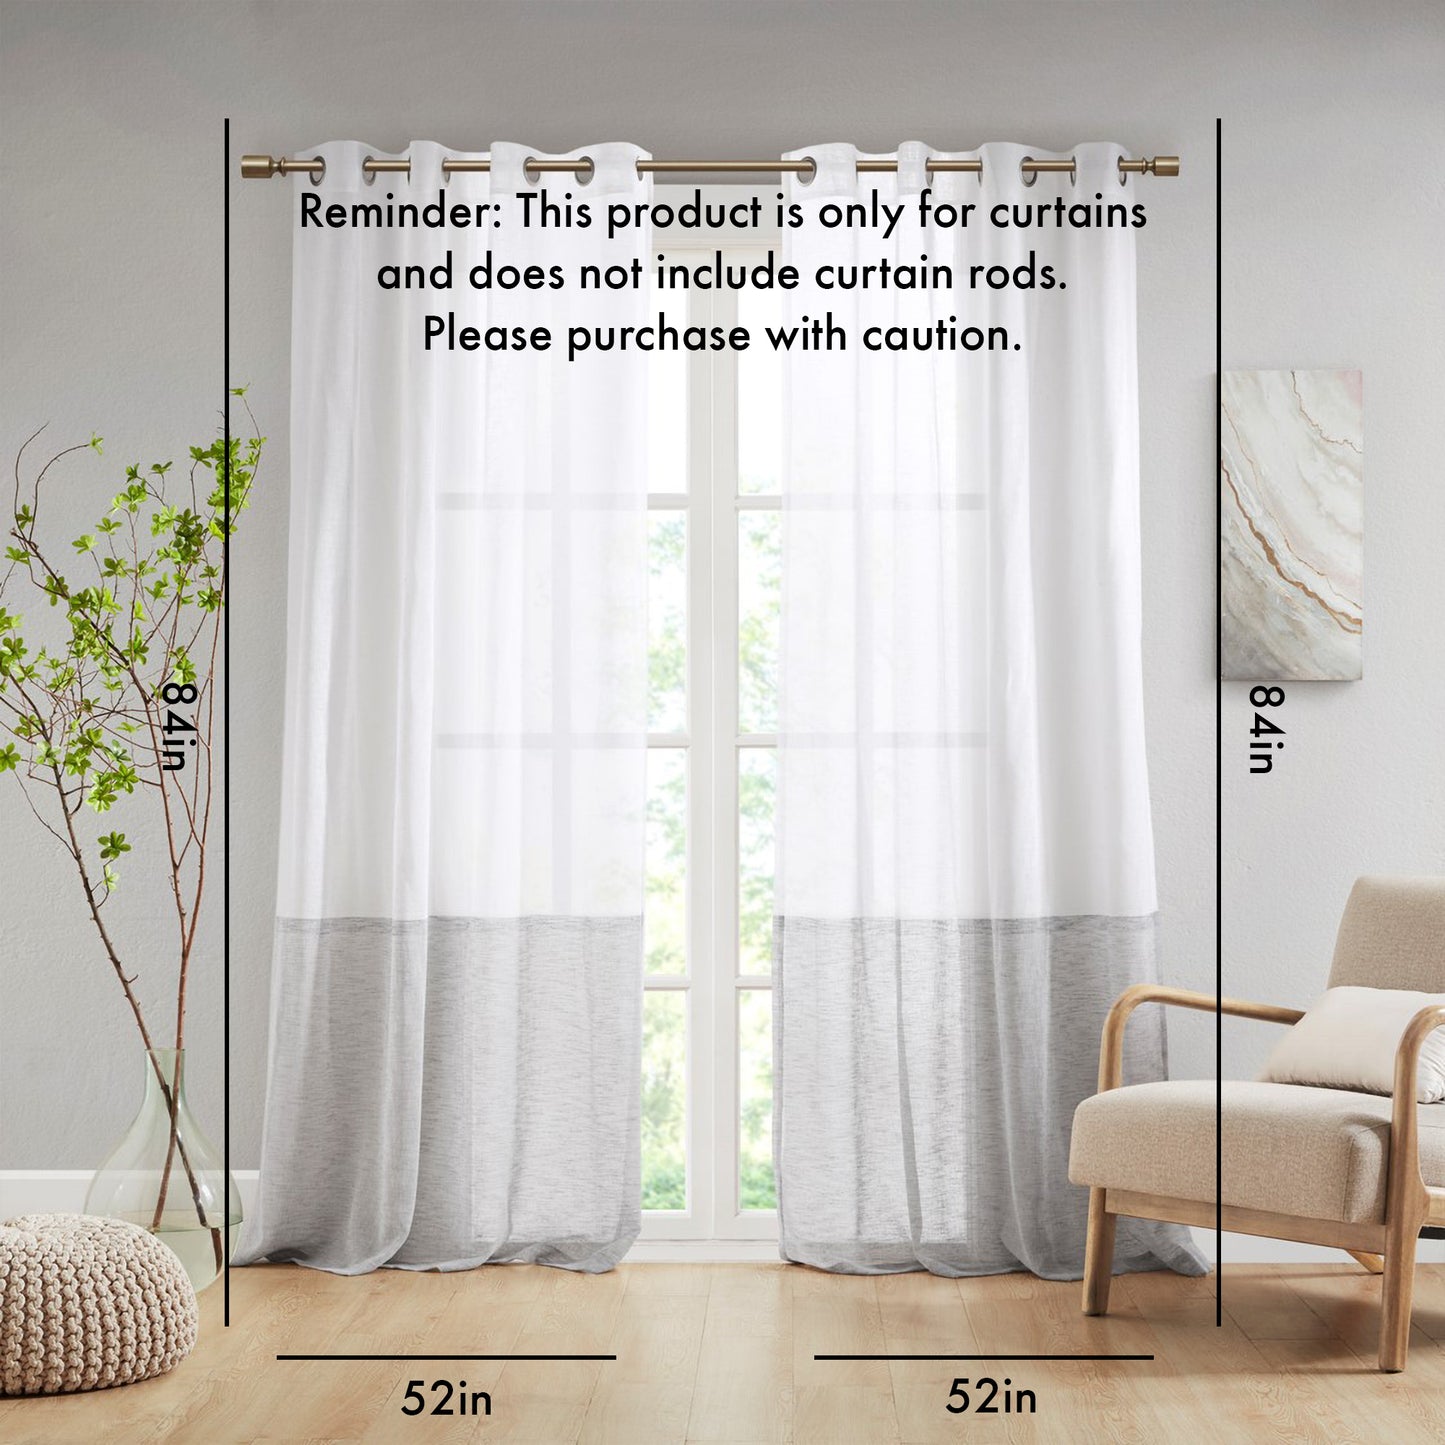 Dual-colored Curtain Panel (Single)